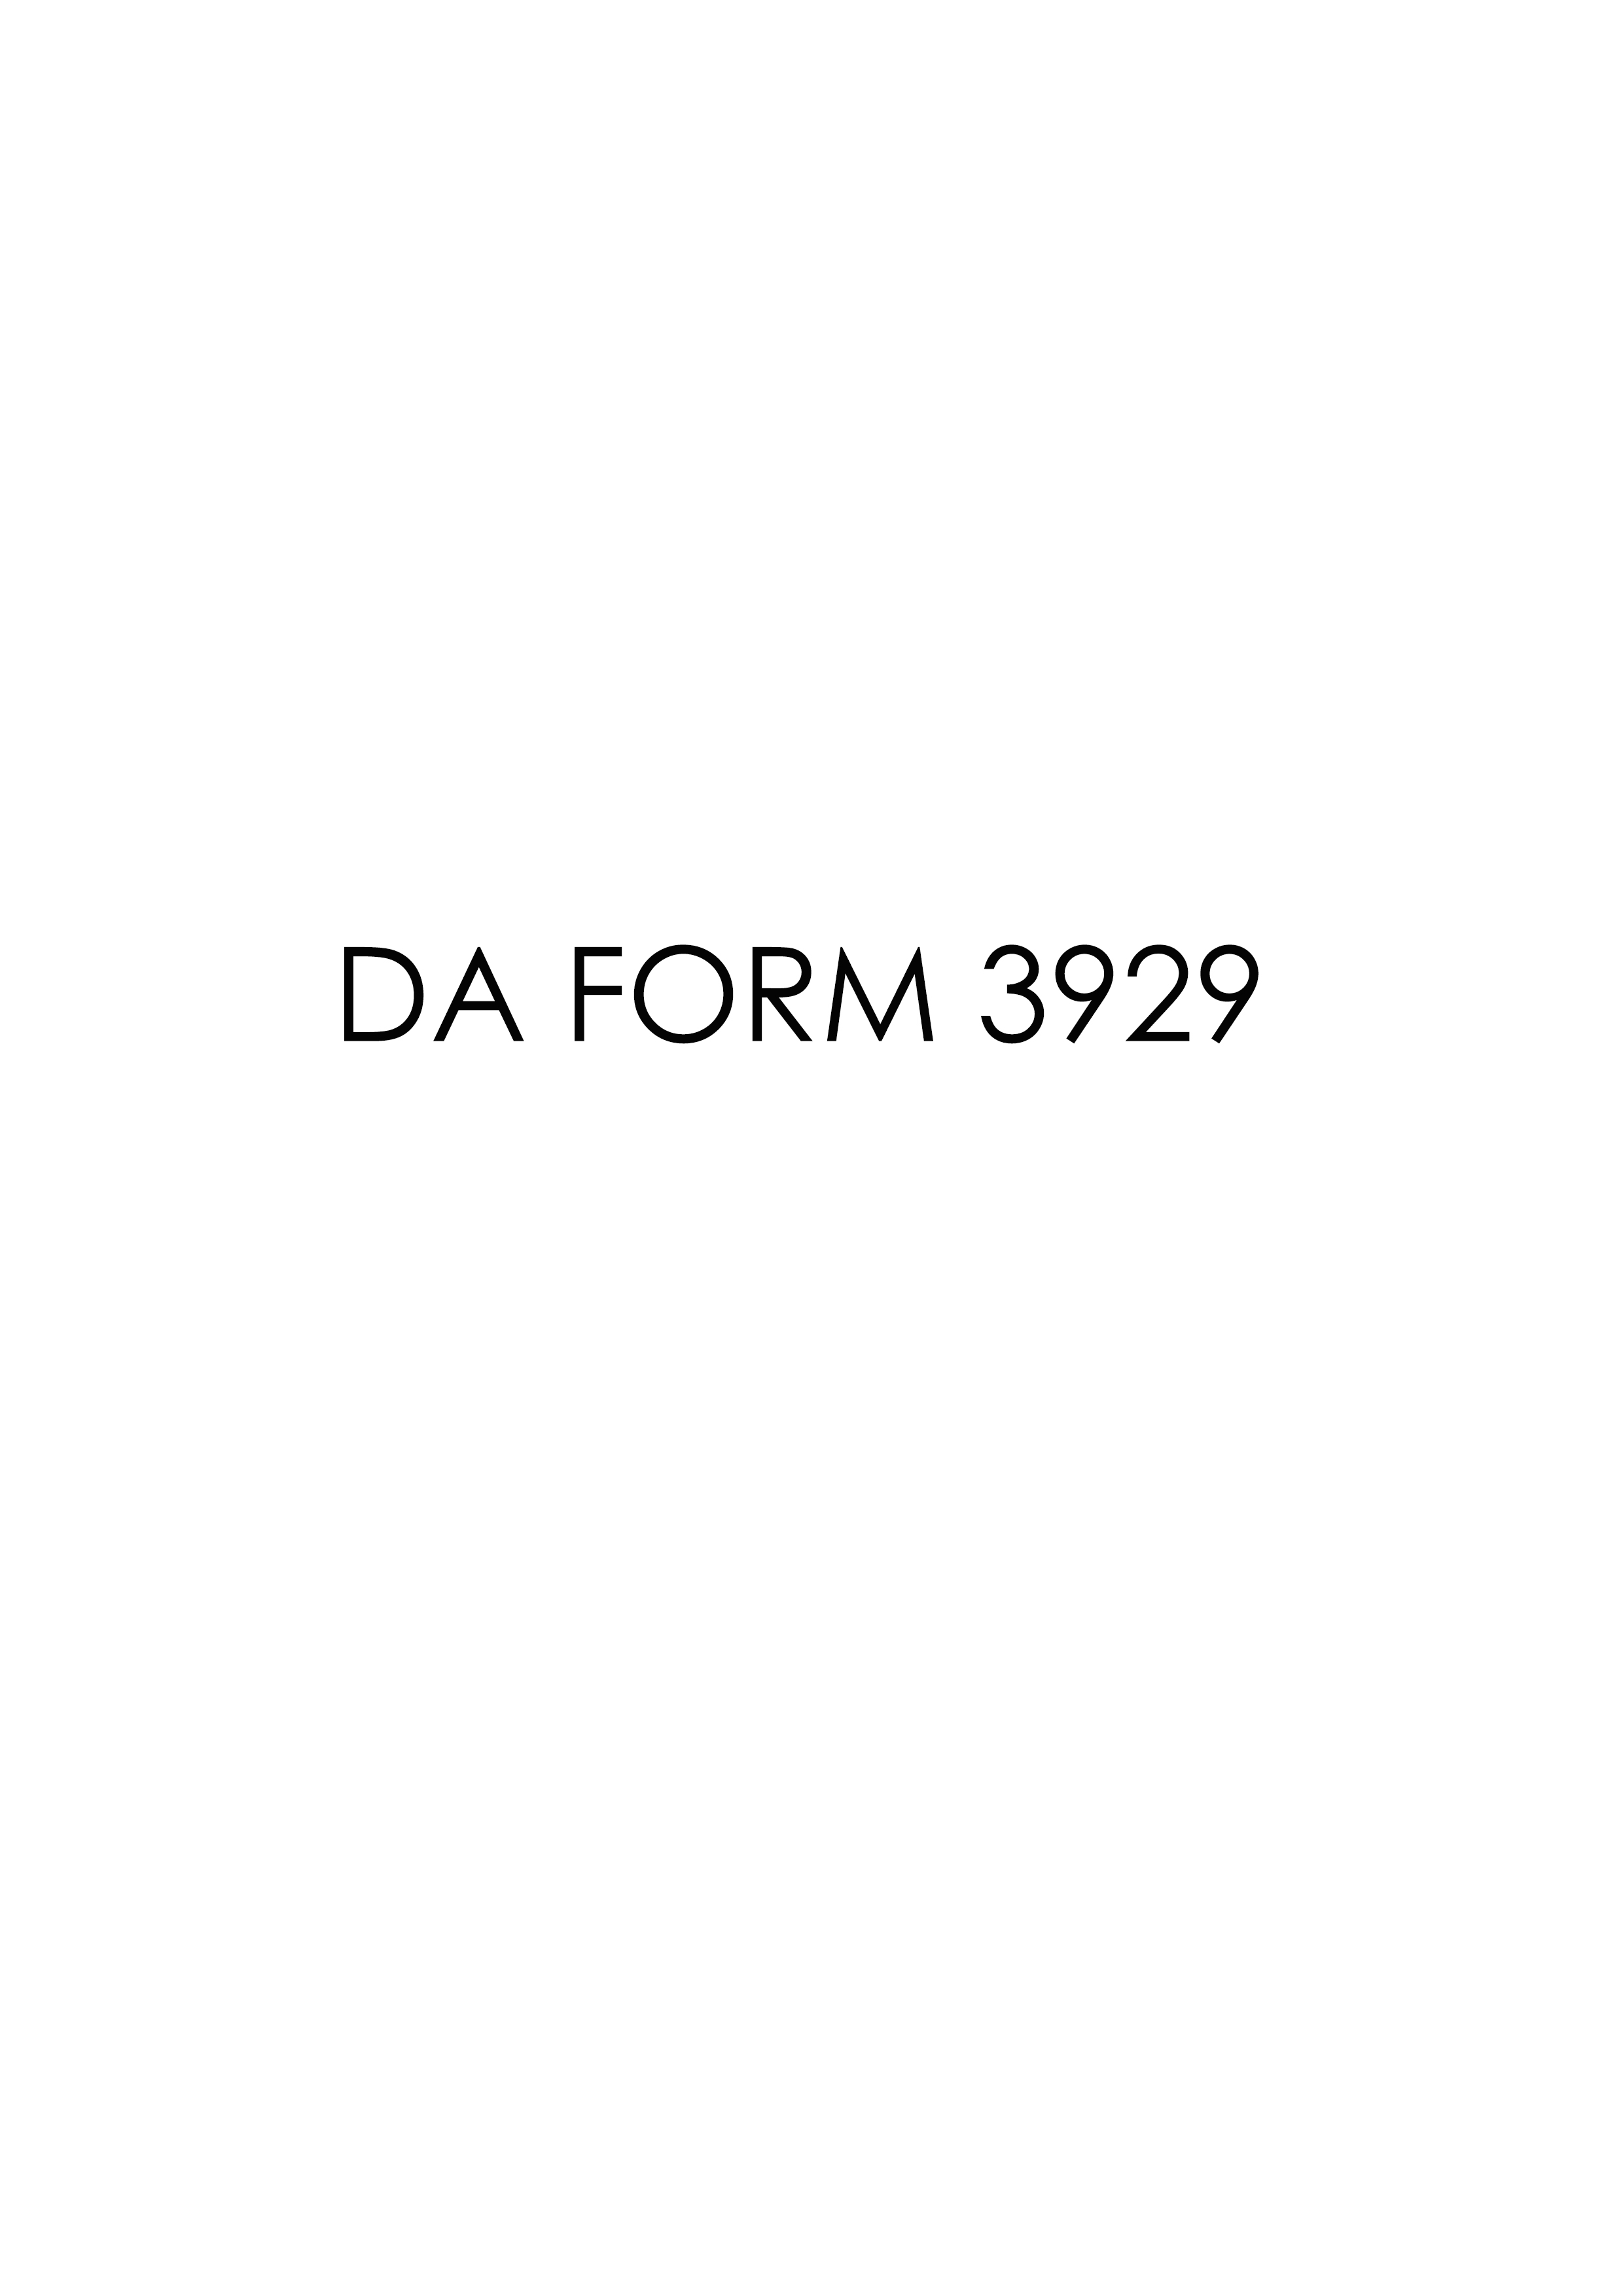 da Form 3929 fillable